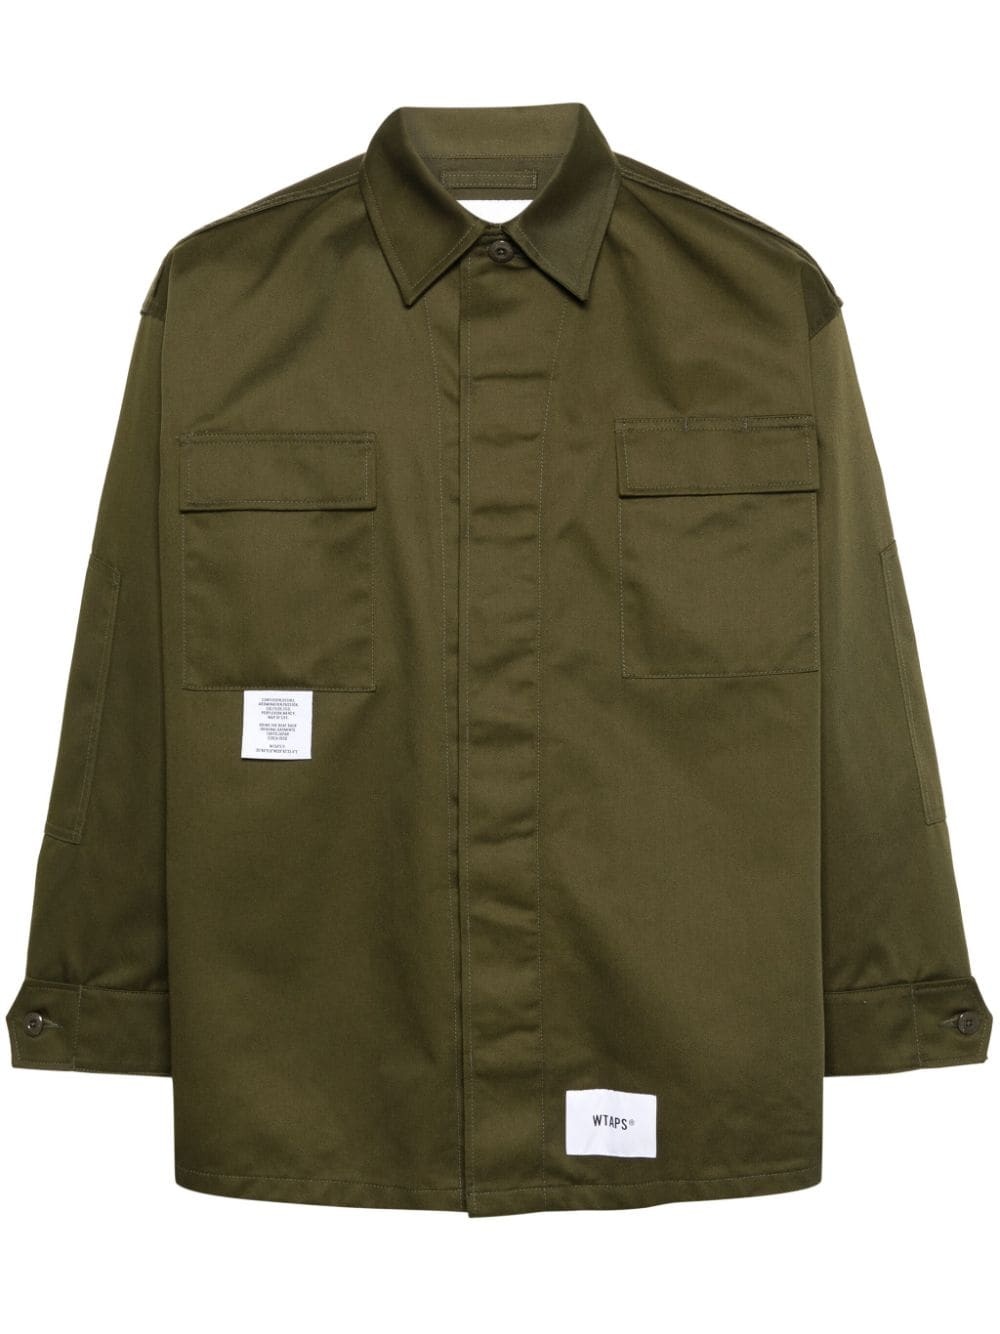 Guardian twill shirt jacket - 1